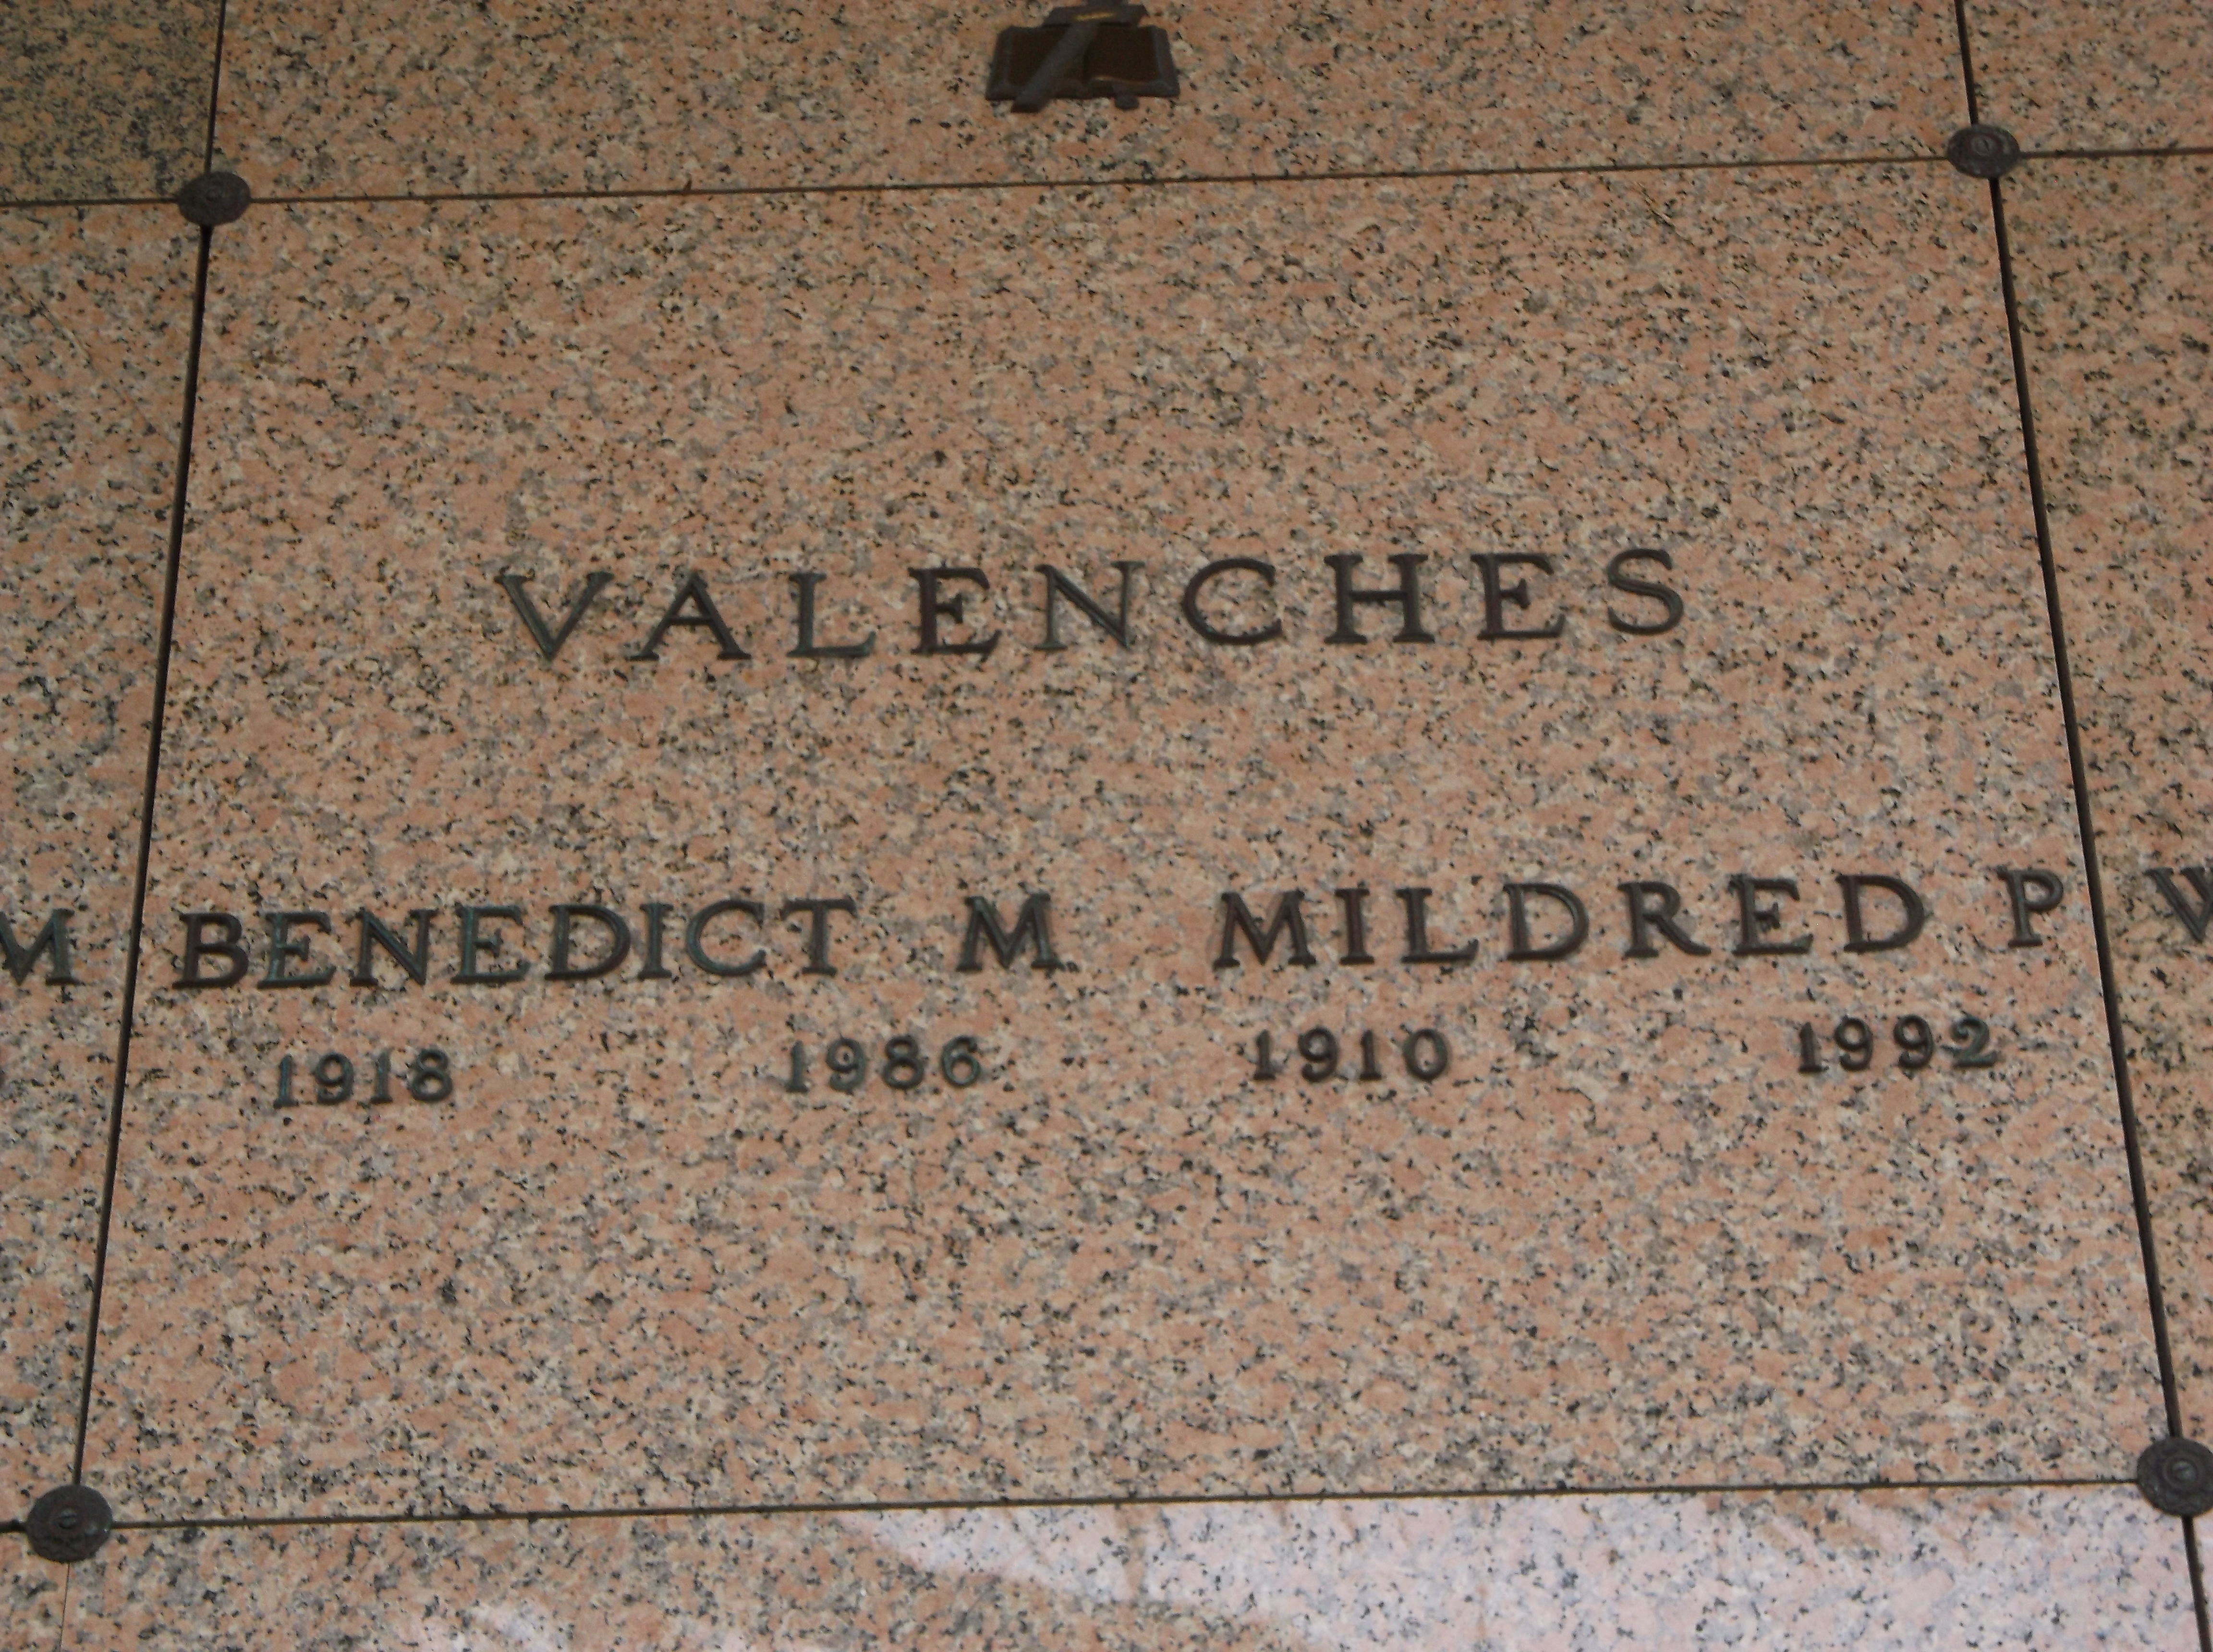 Benedict M Valenches